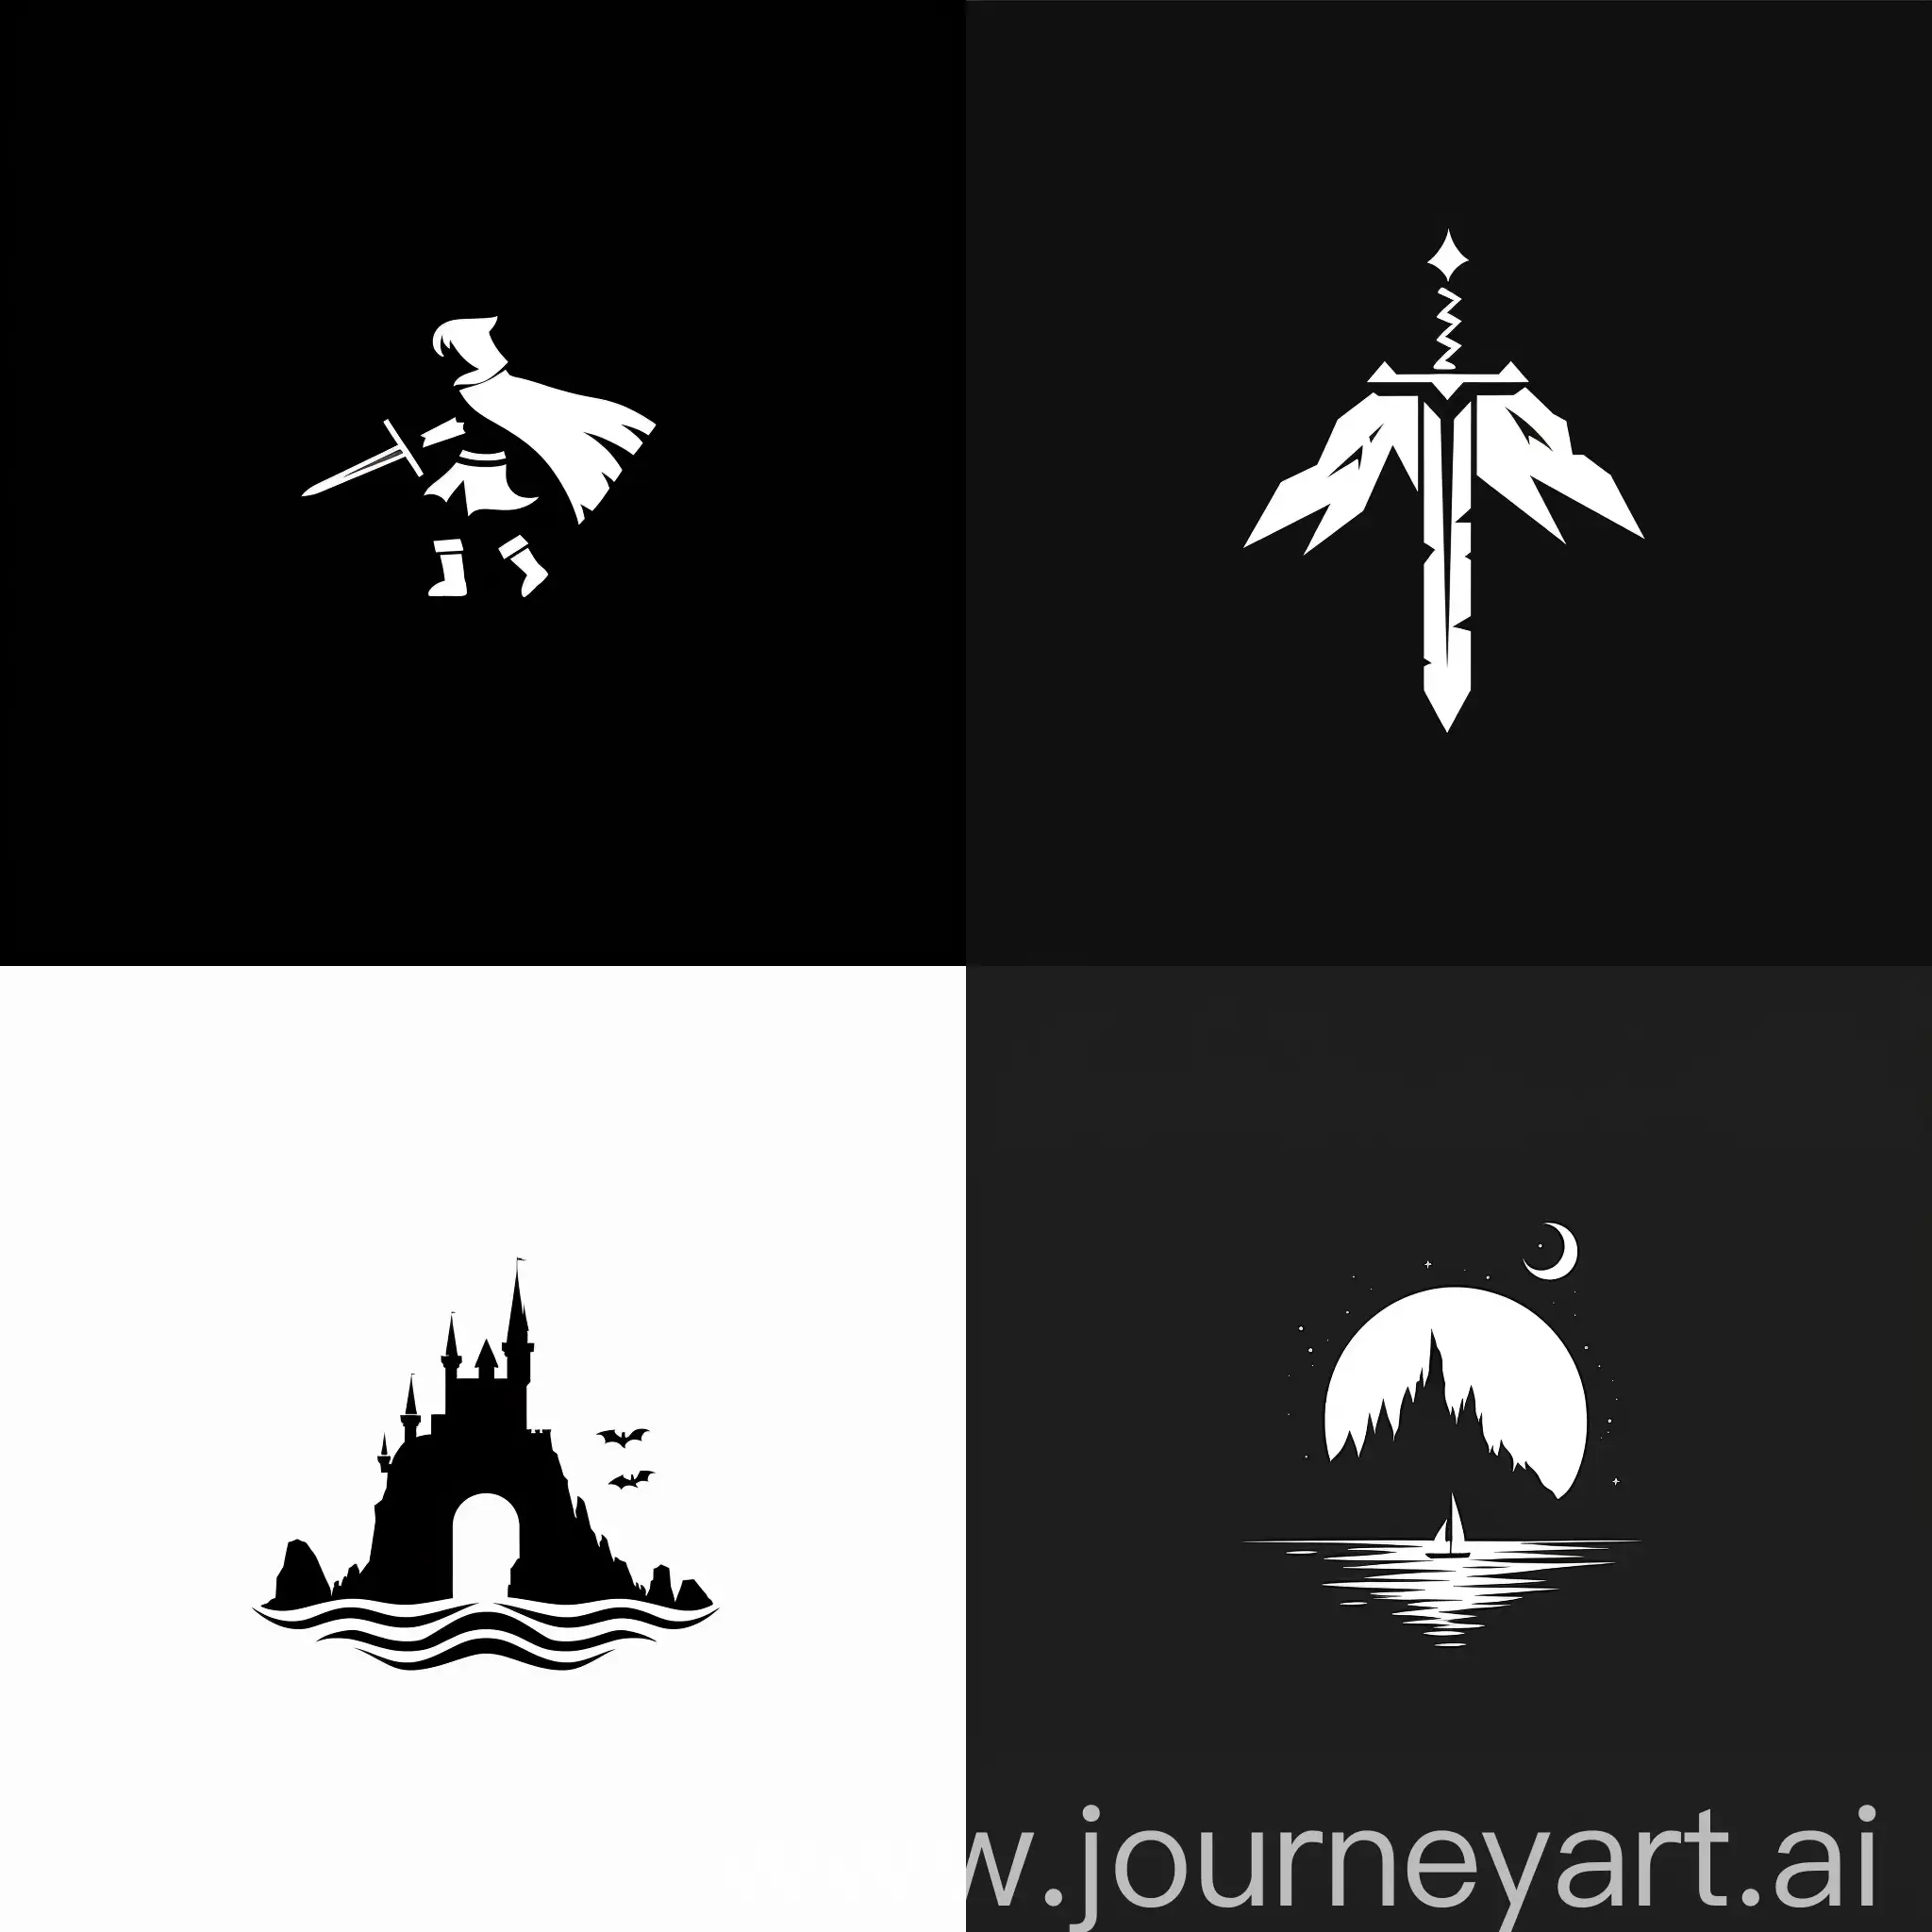 Minimalist-Fantasy-Adventure-Logo-in-HighResolution-Black-and-White